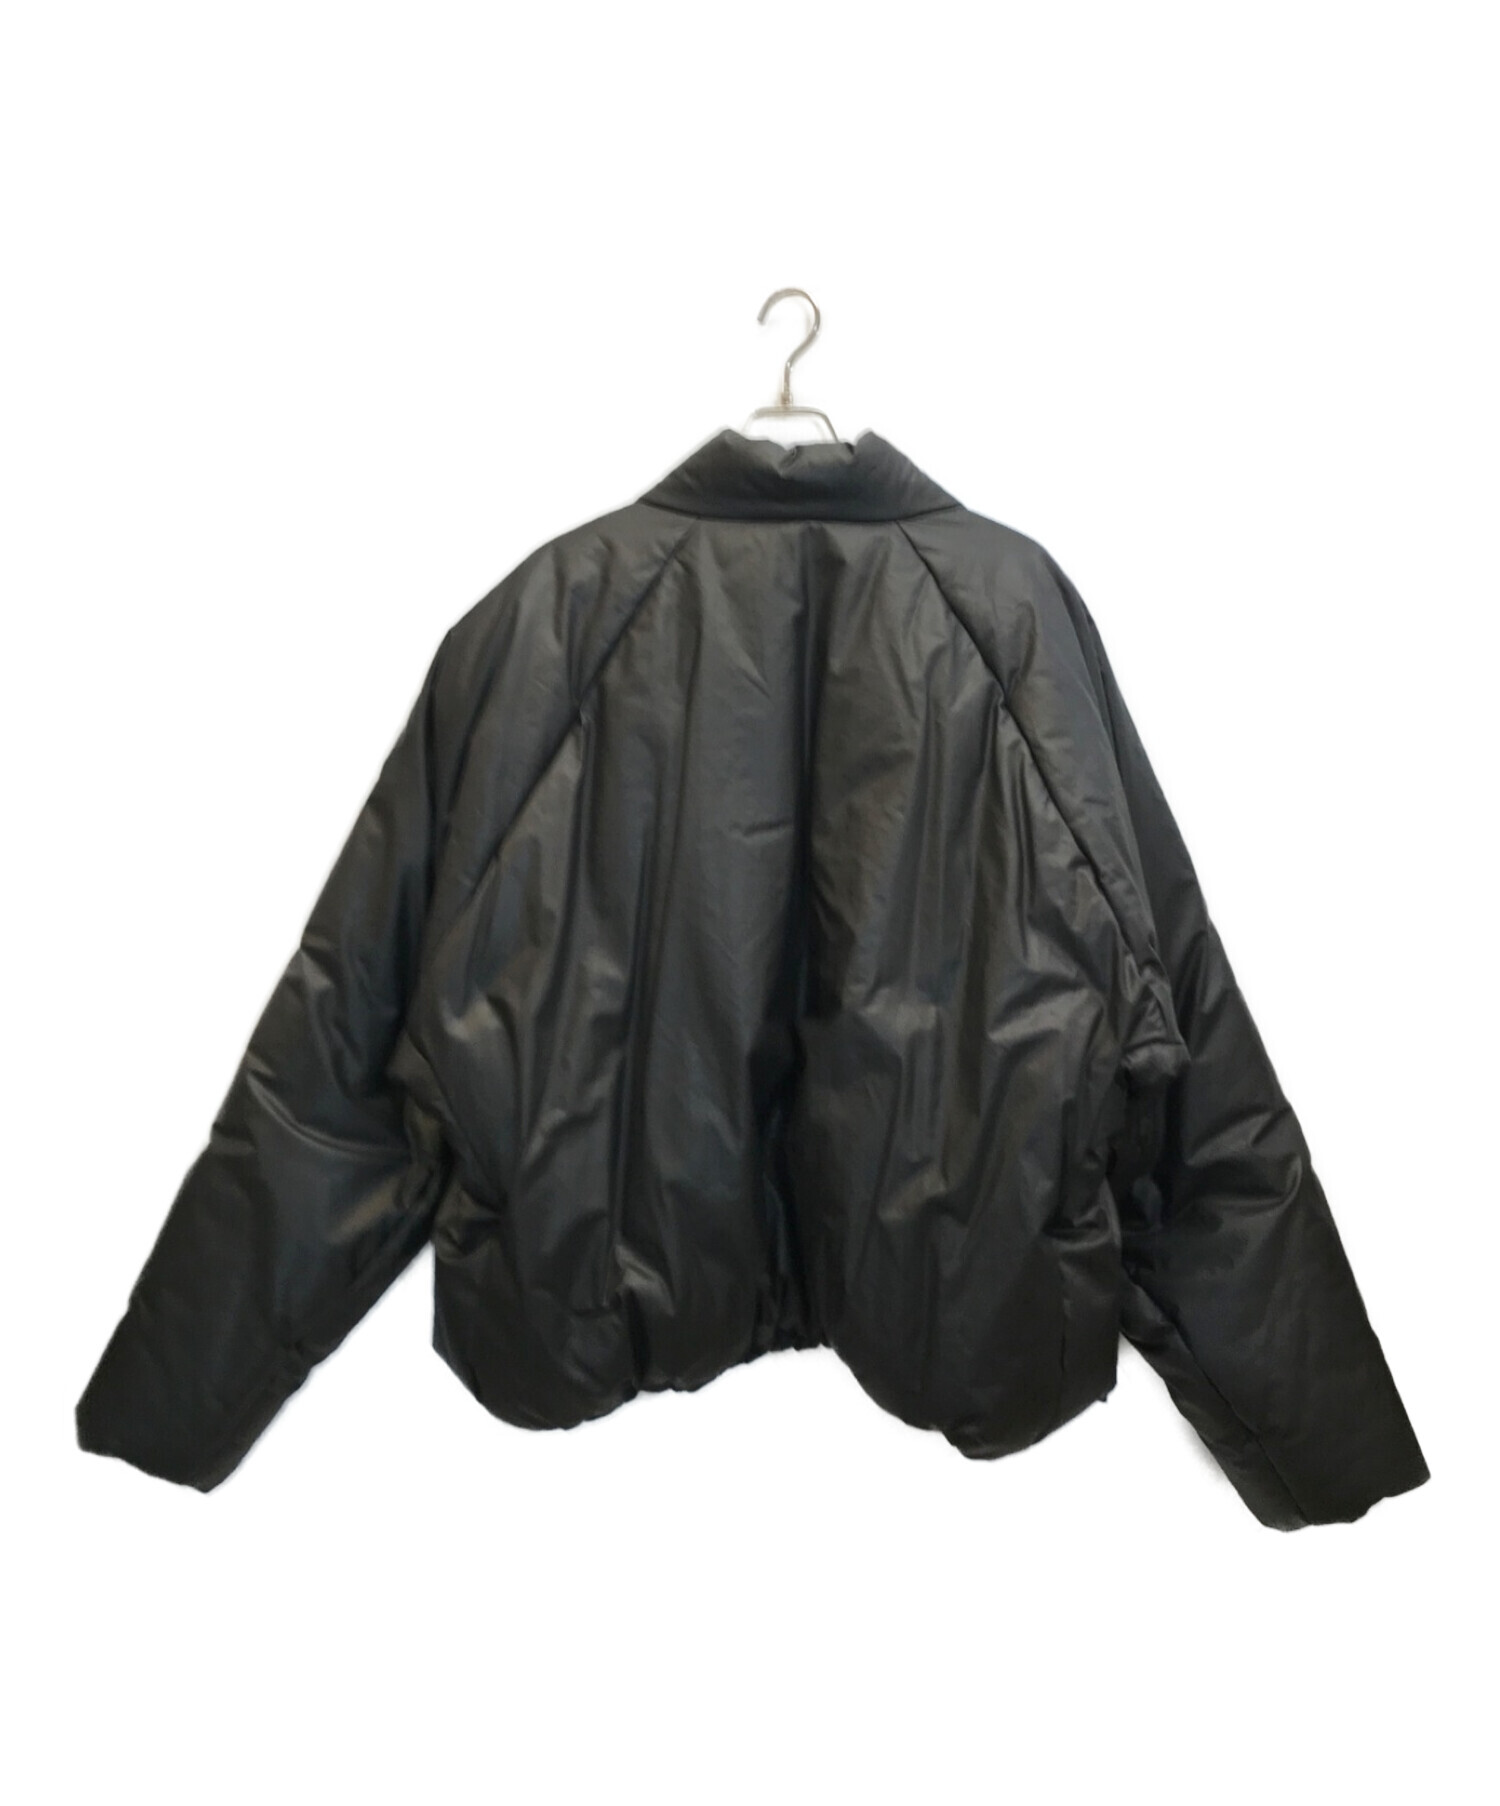 yeezy gap (イージーギャップ) Round Jacket ラウンドジャケット ブラック サイズ:L